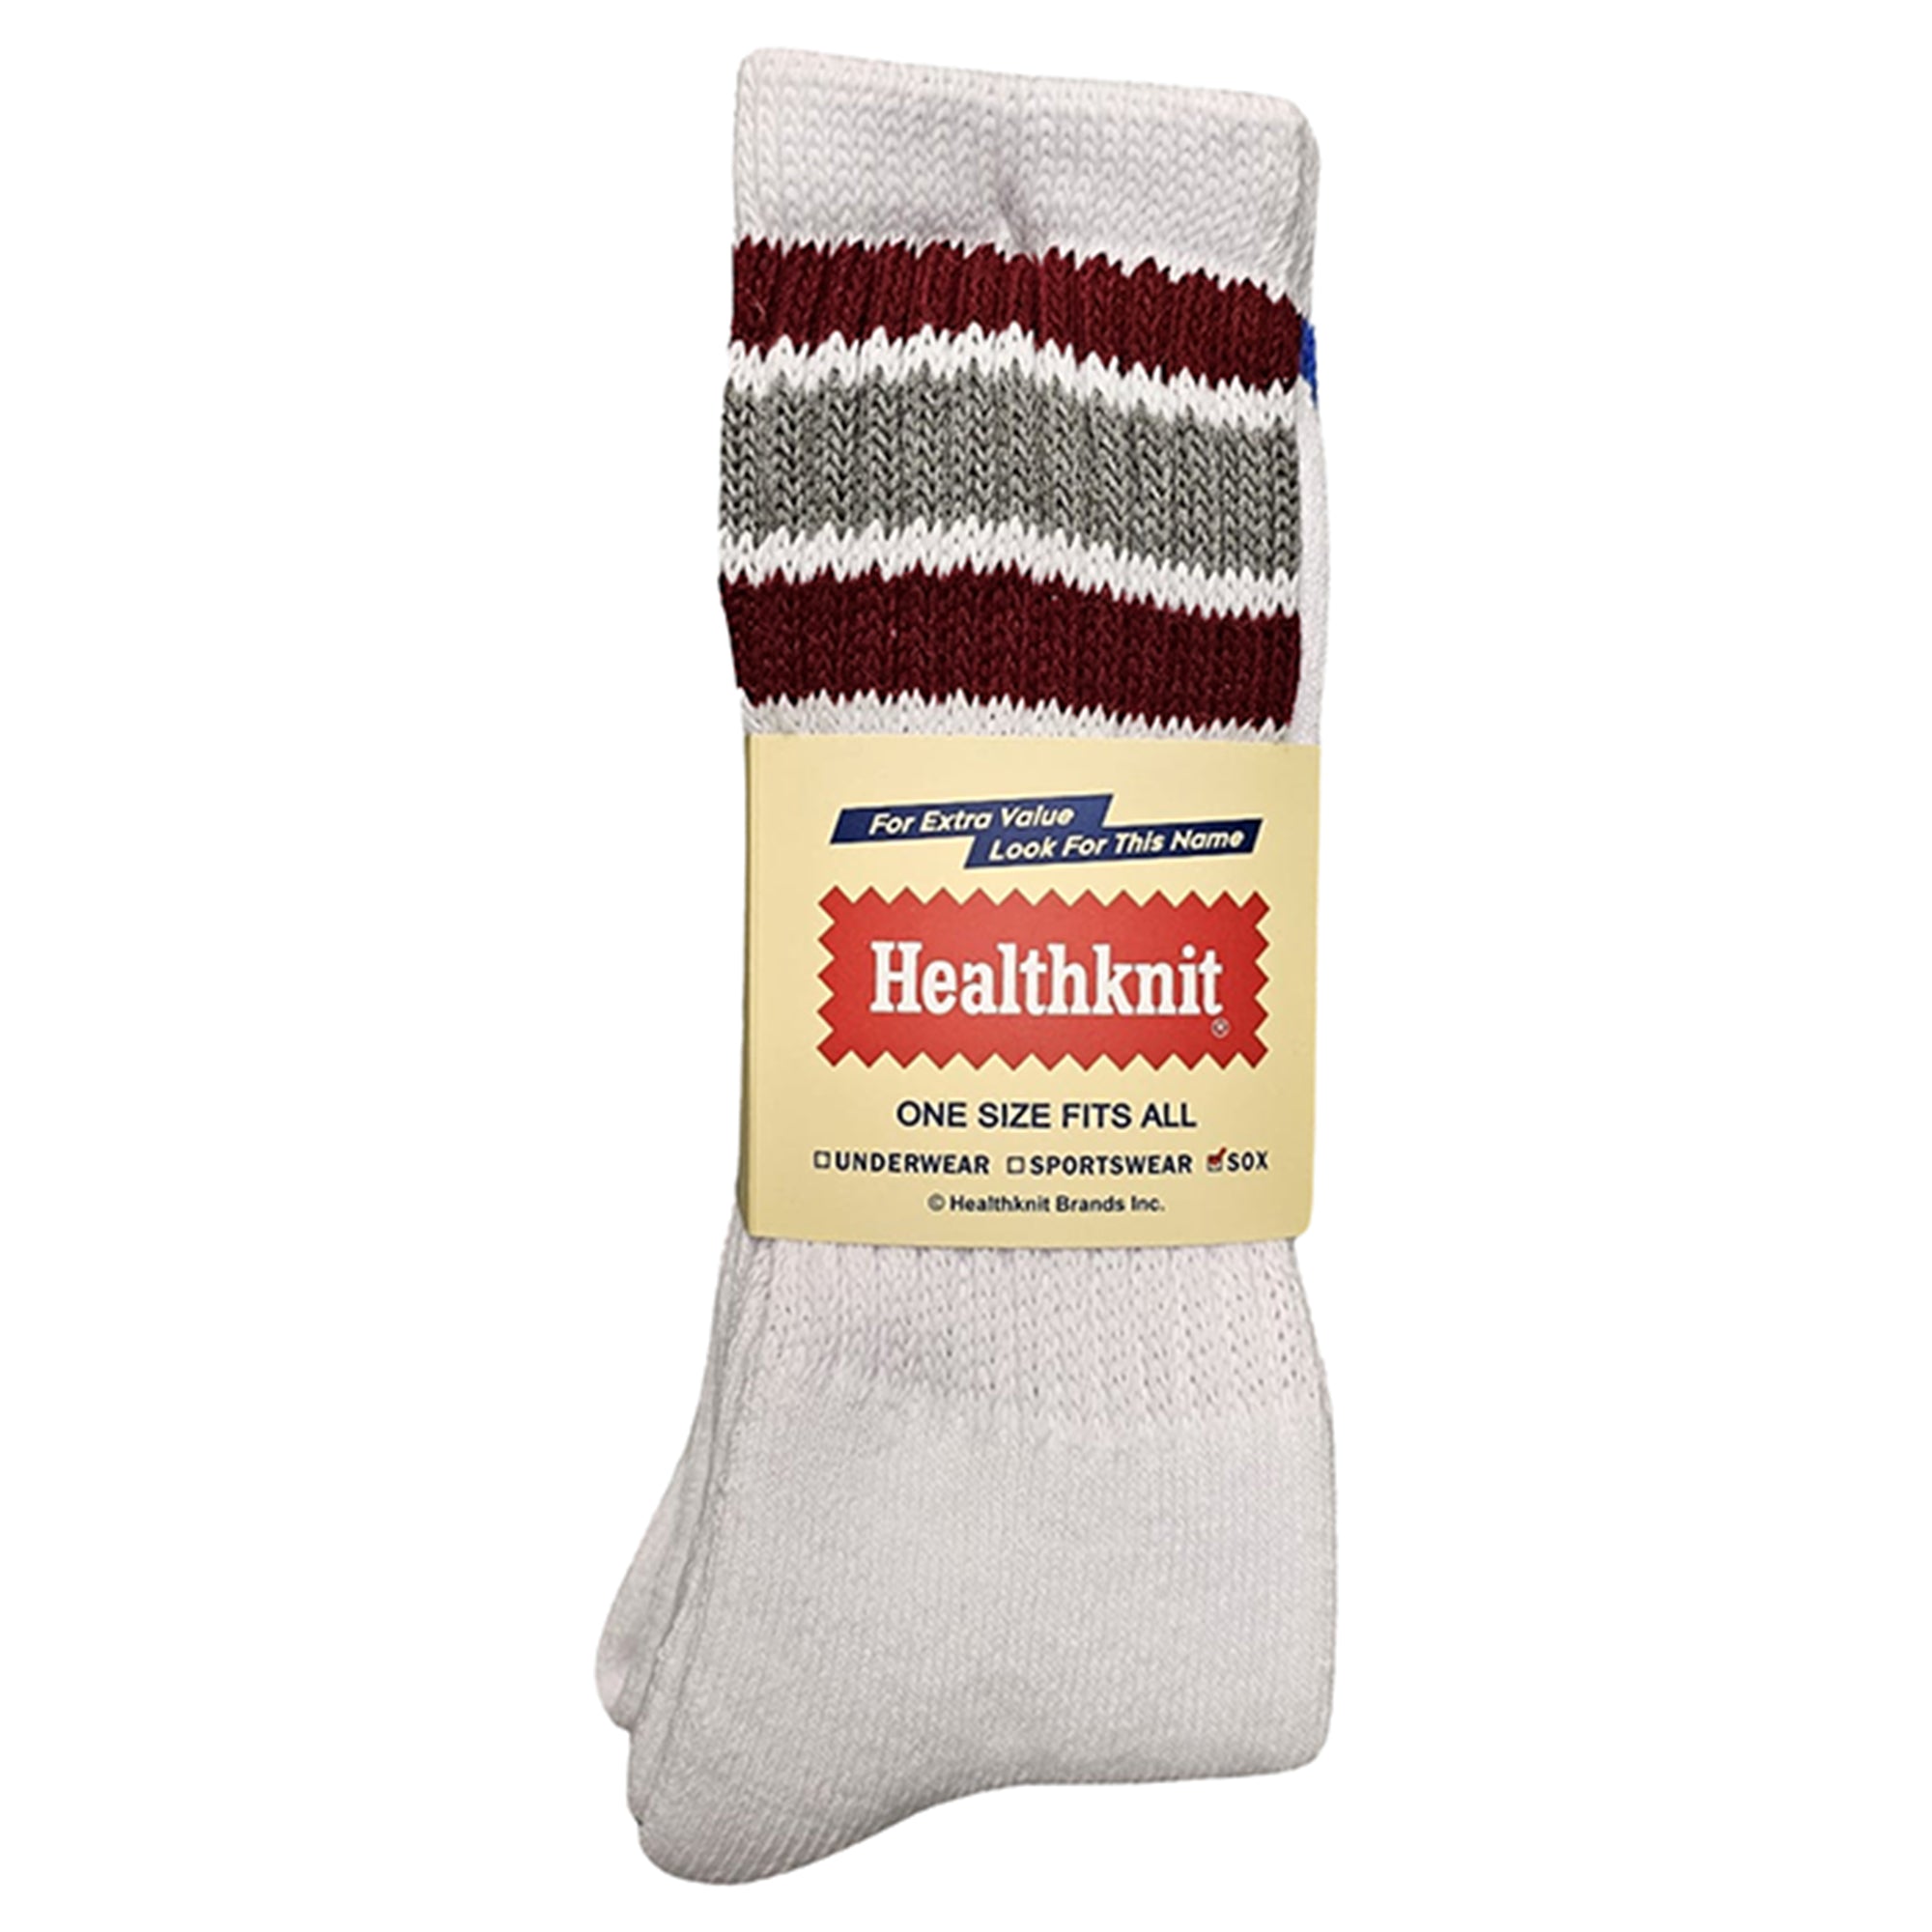 Healthknit Socks 3 Pack - White / Multi Stripe